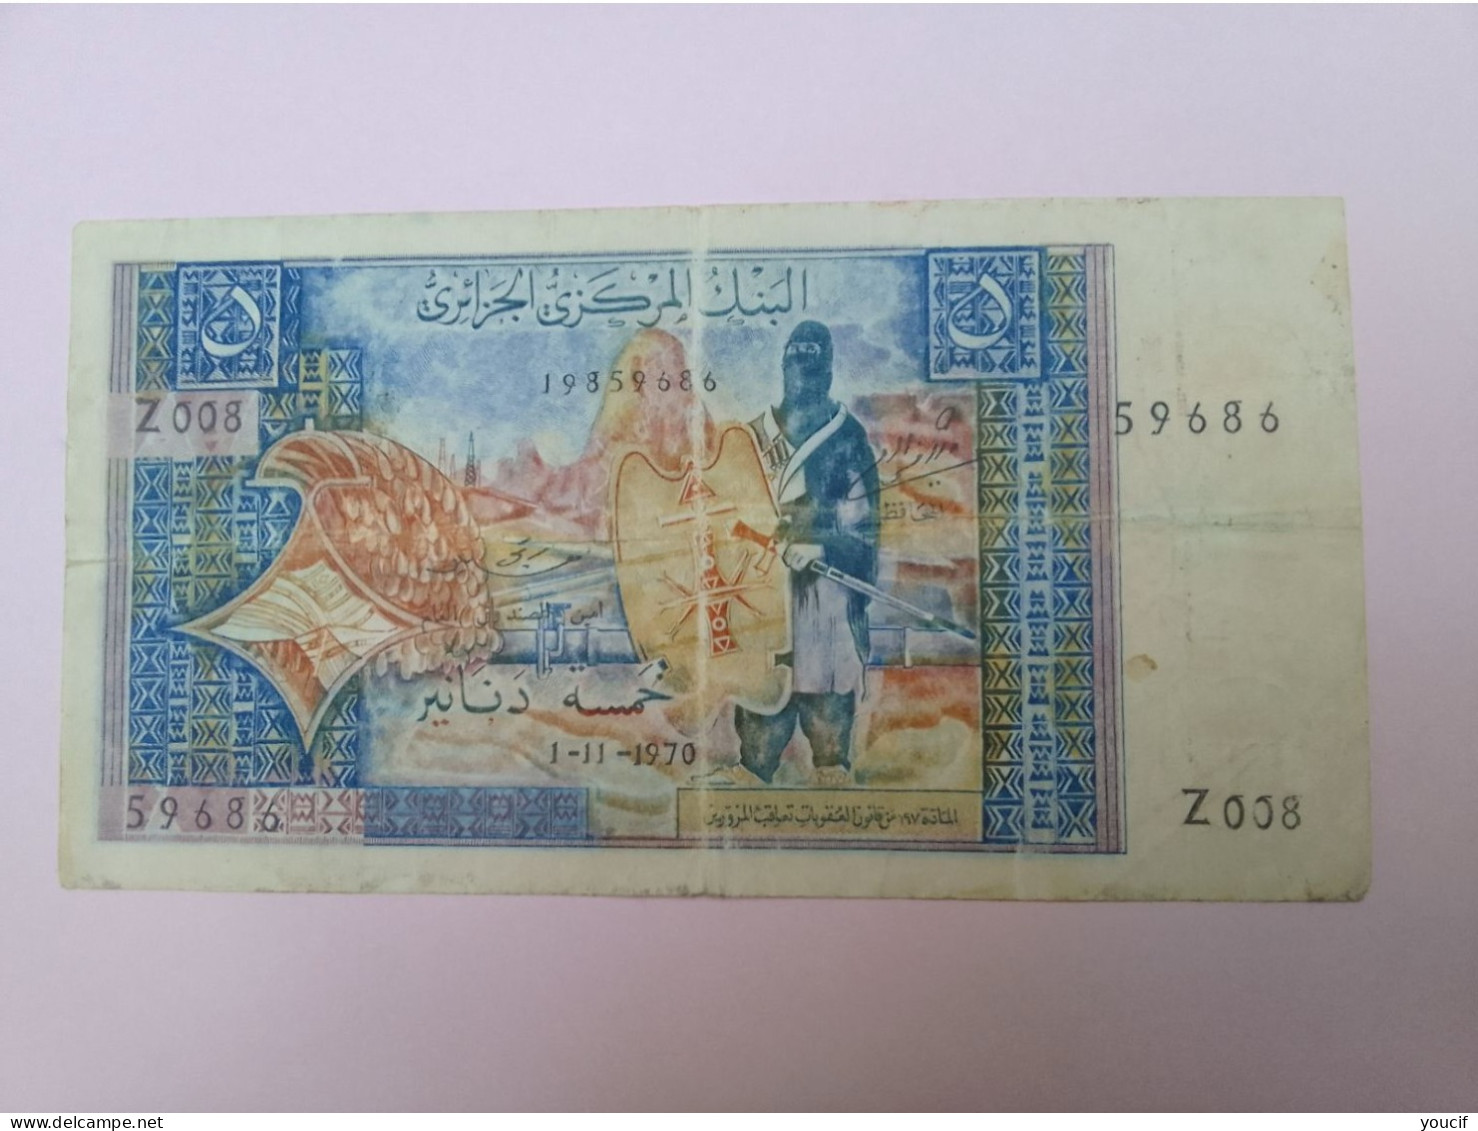 Billet De Banque D Algerie 5 Dinars Du 1 Novembre 1970 - Algeria